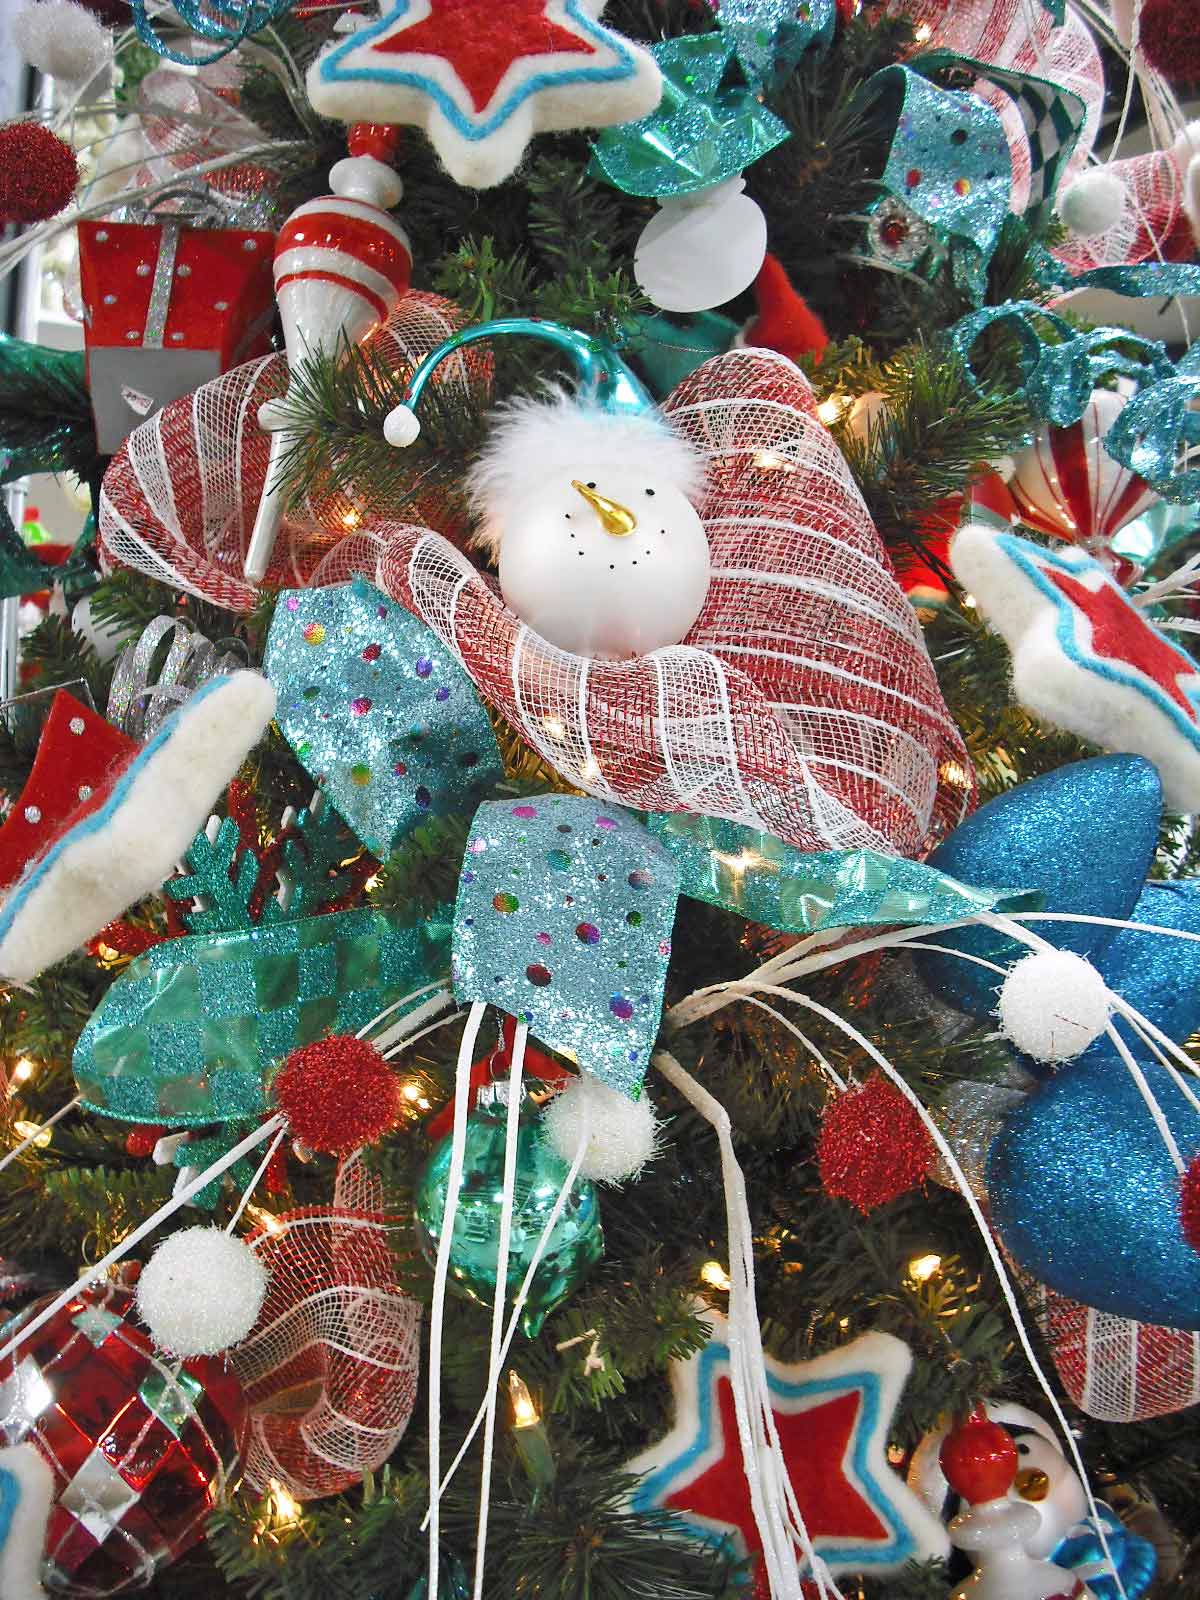 38 Teal Christmas Tree Decorations Ideas  Decoration Love